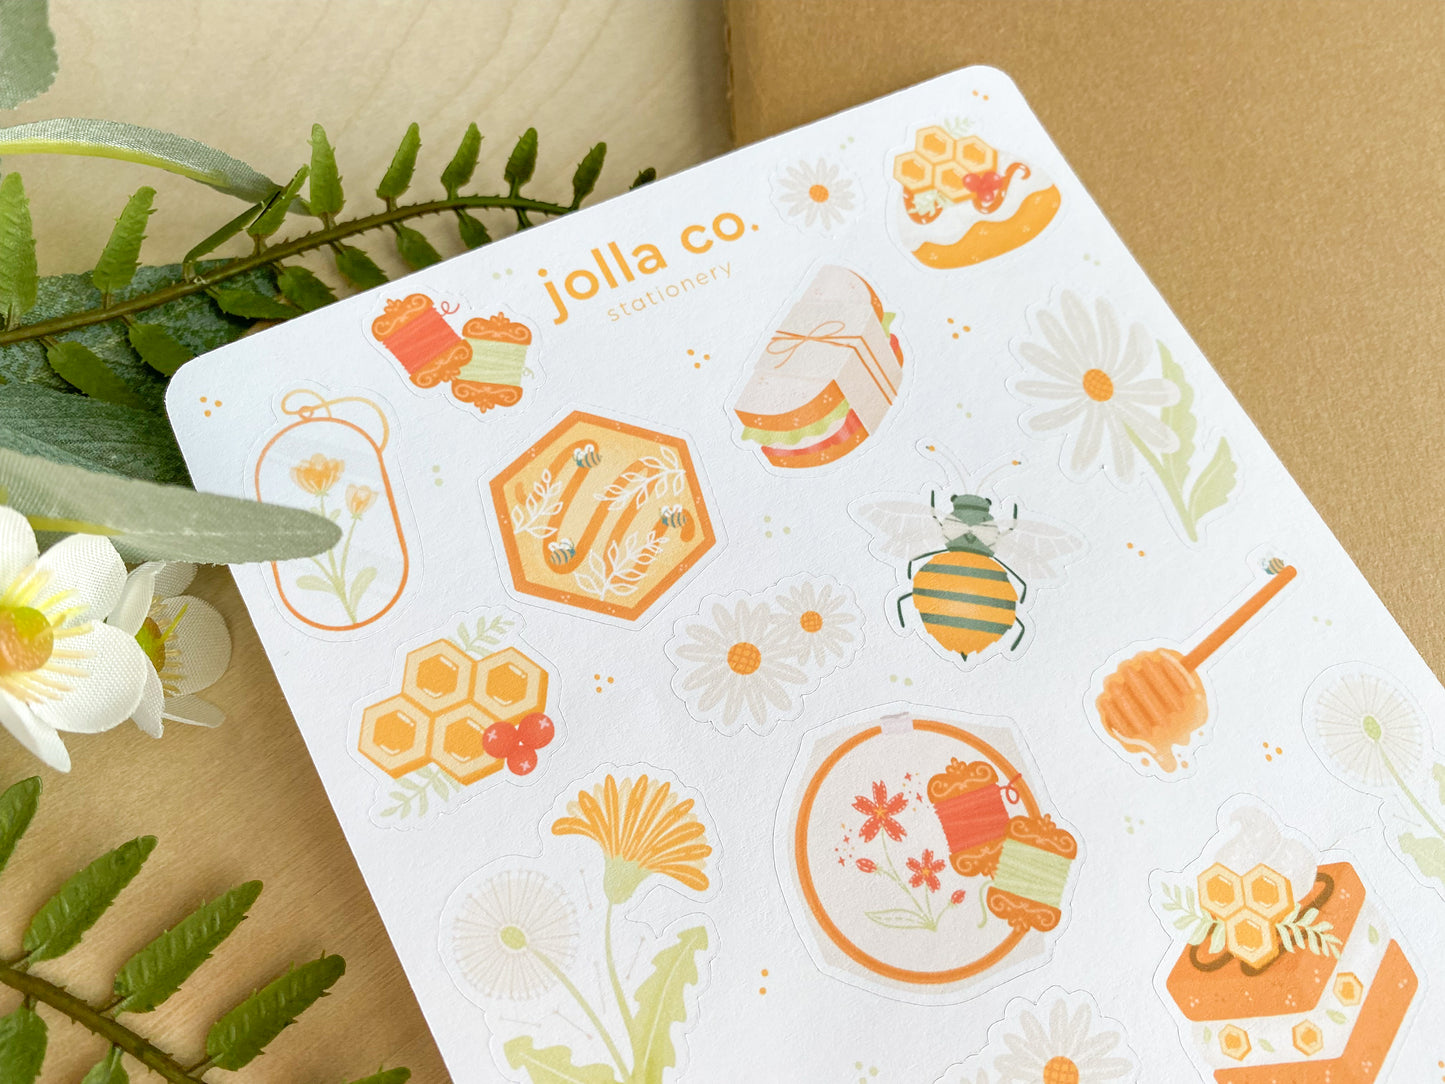 Honeybee Sticker Sheet | For Bullet Journals, Planners, & Crafts